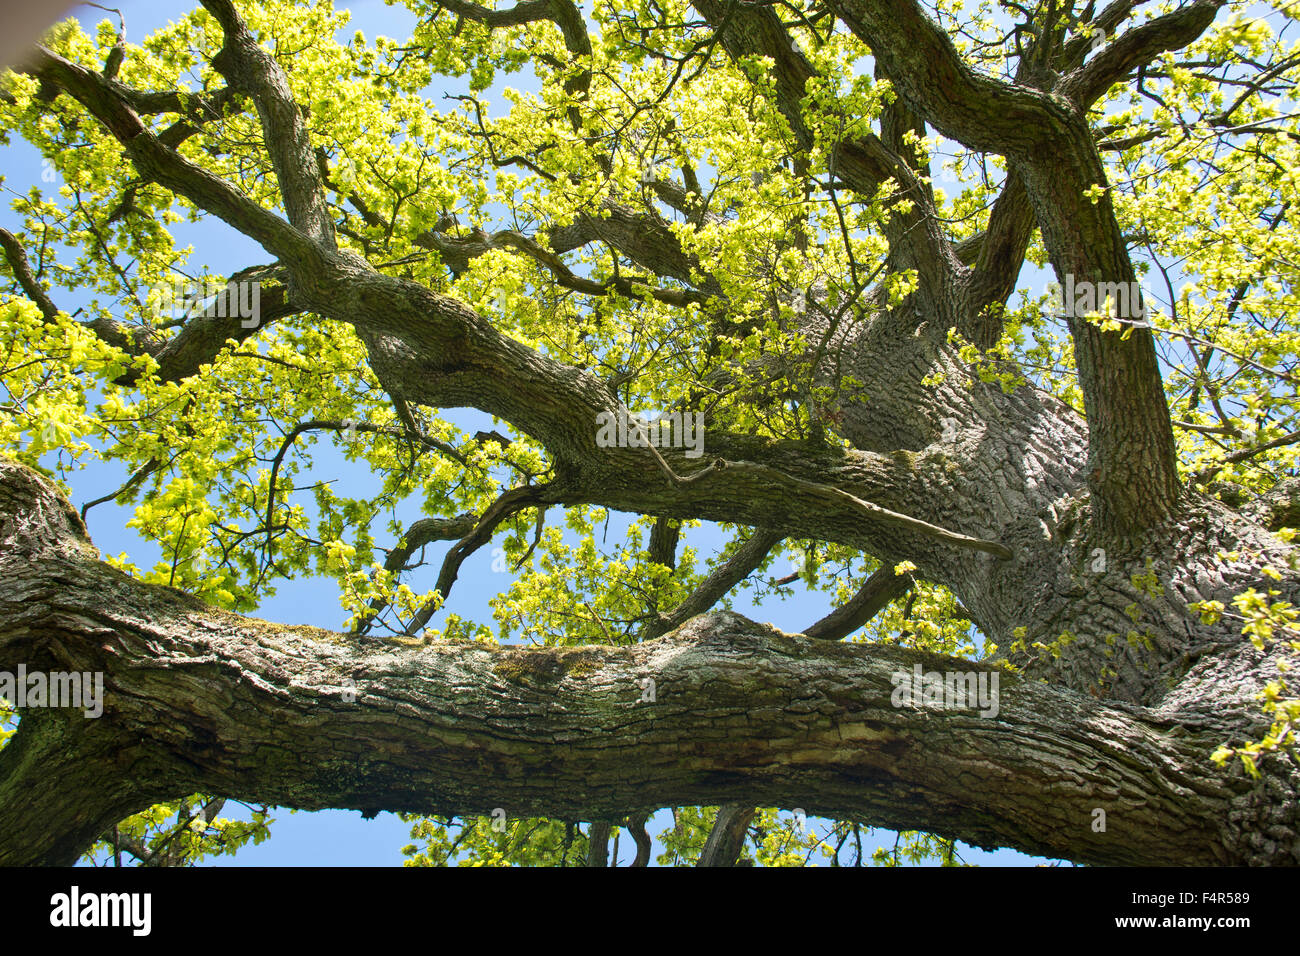 Switzerland, Europe, Baselland, oak, tree, trunk, branch, knot, sheets, leaves, spring, bark Stock Photo